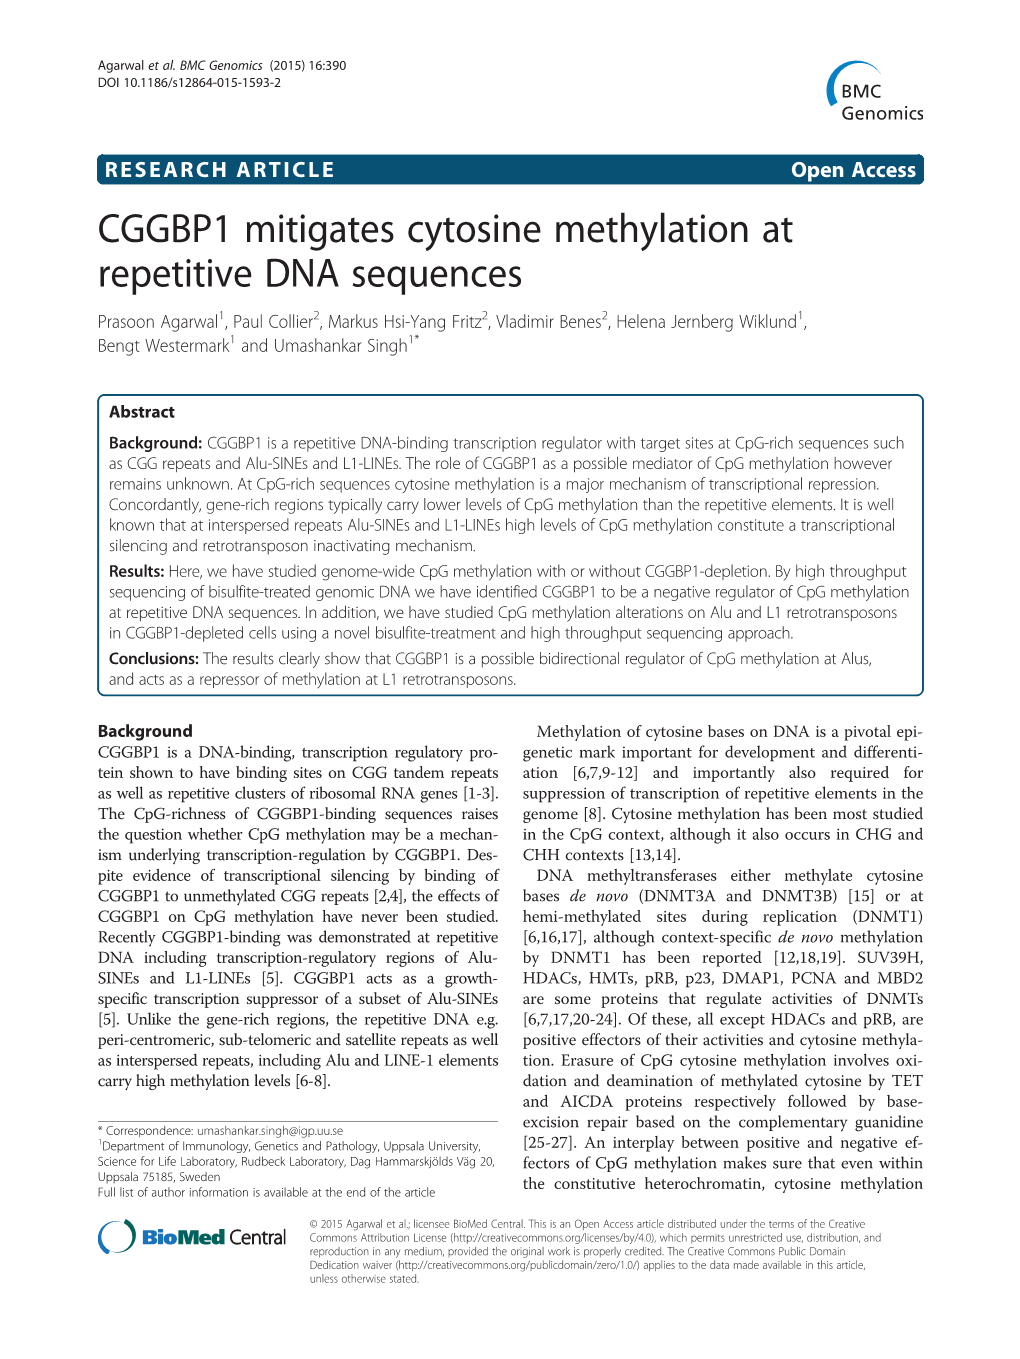 CGGBP1 Mitigates Cytosine Methylation at Repetitive DNA